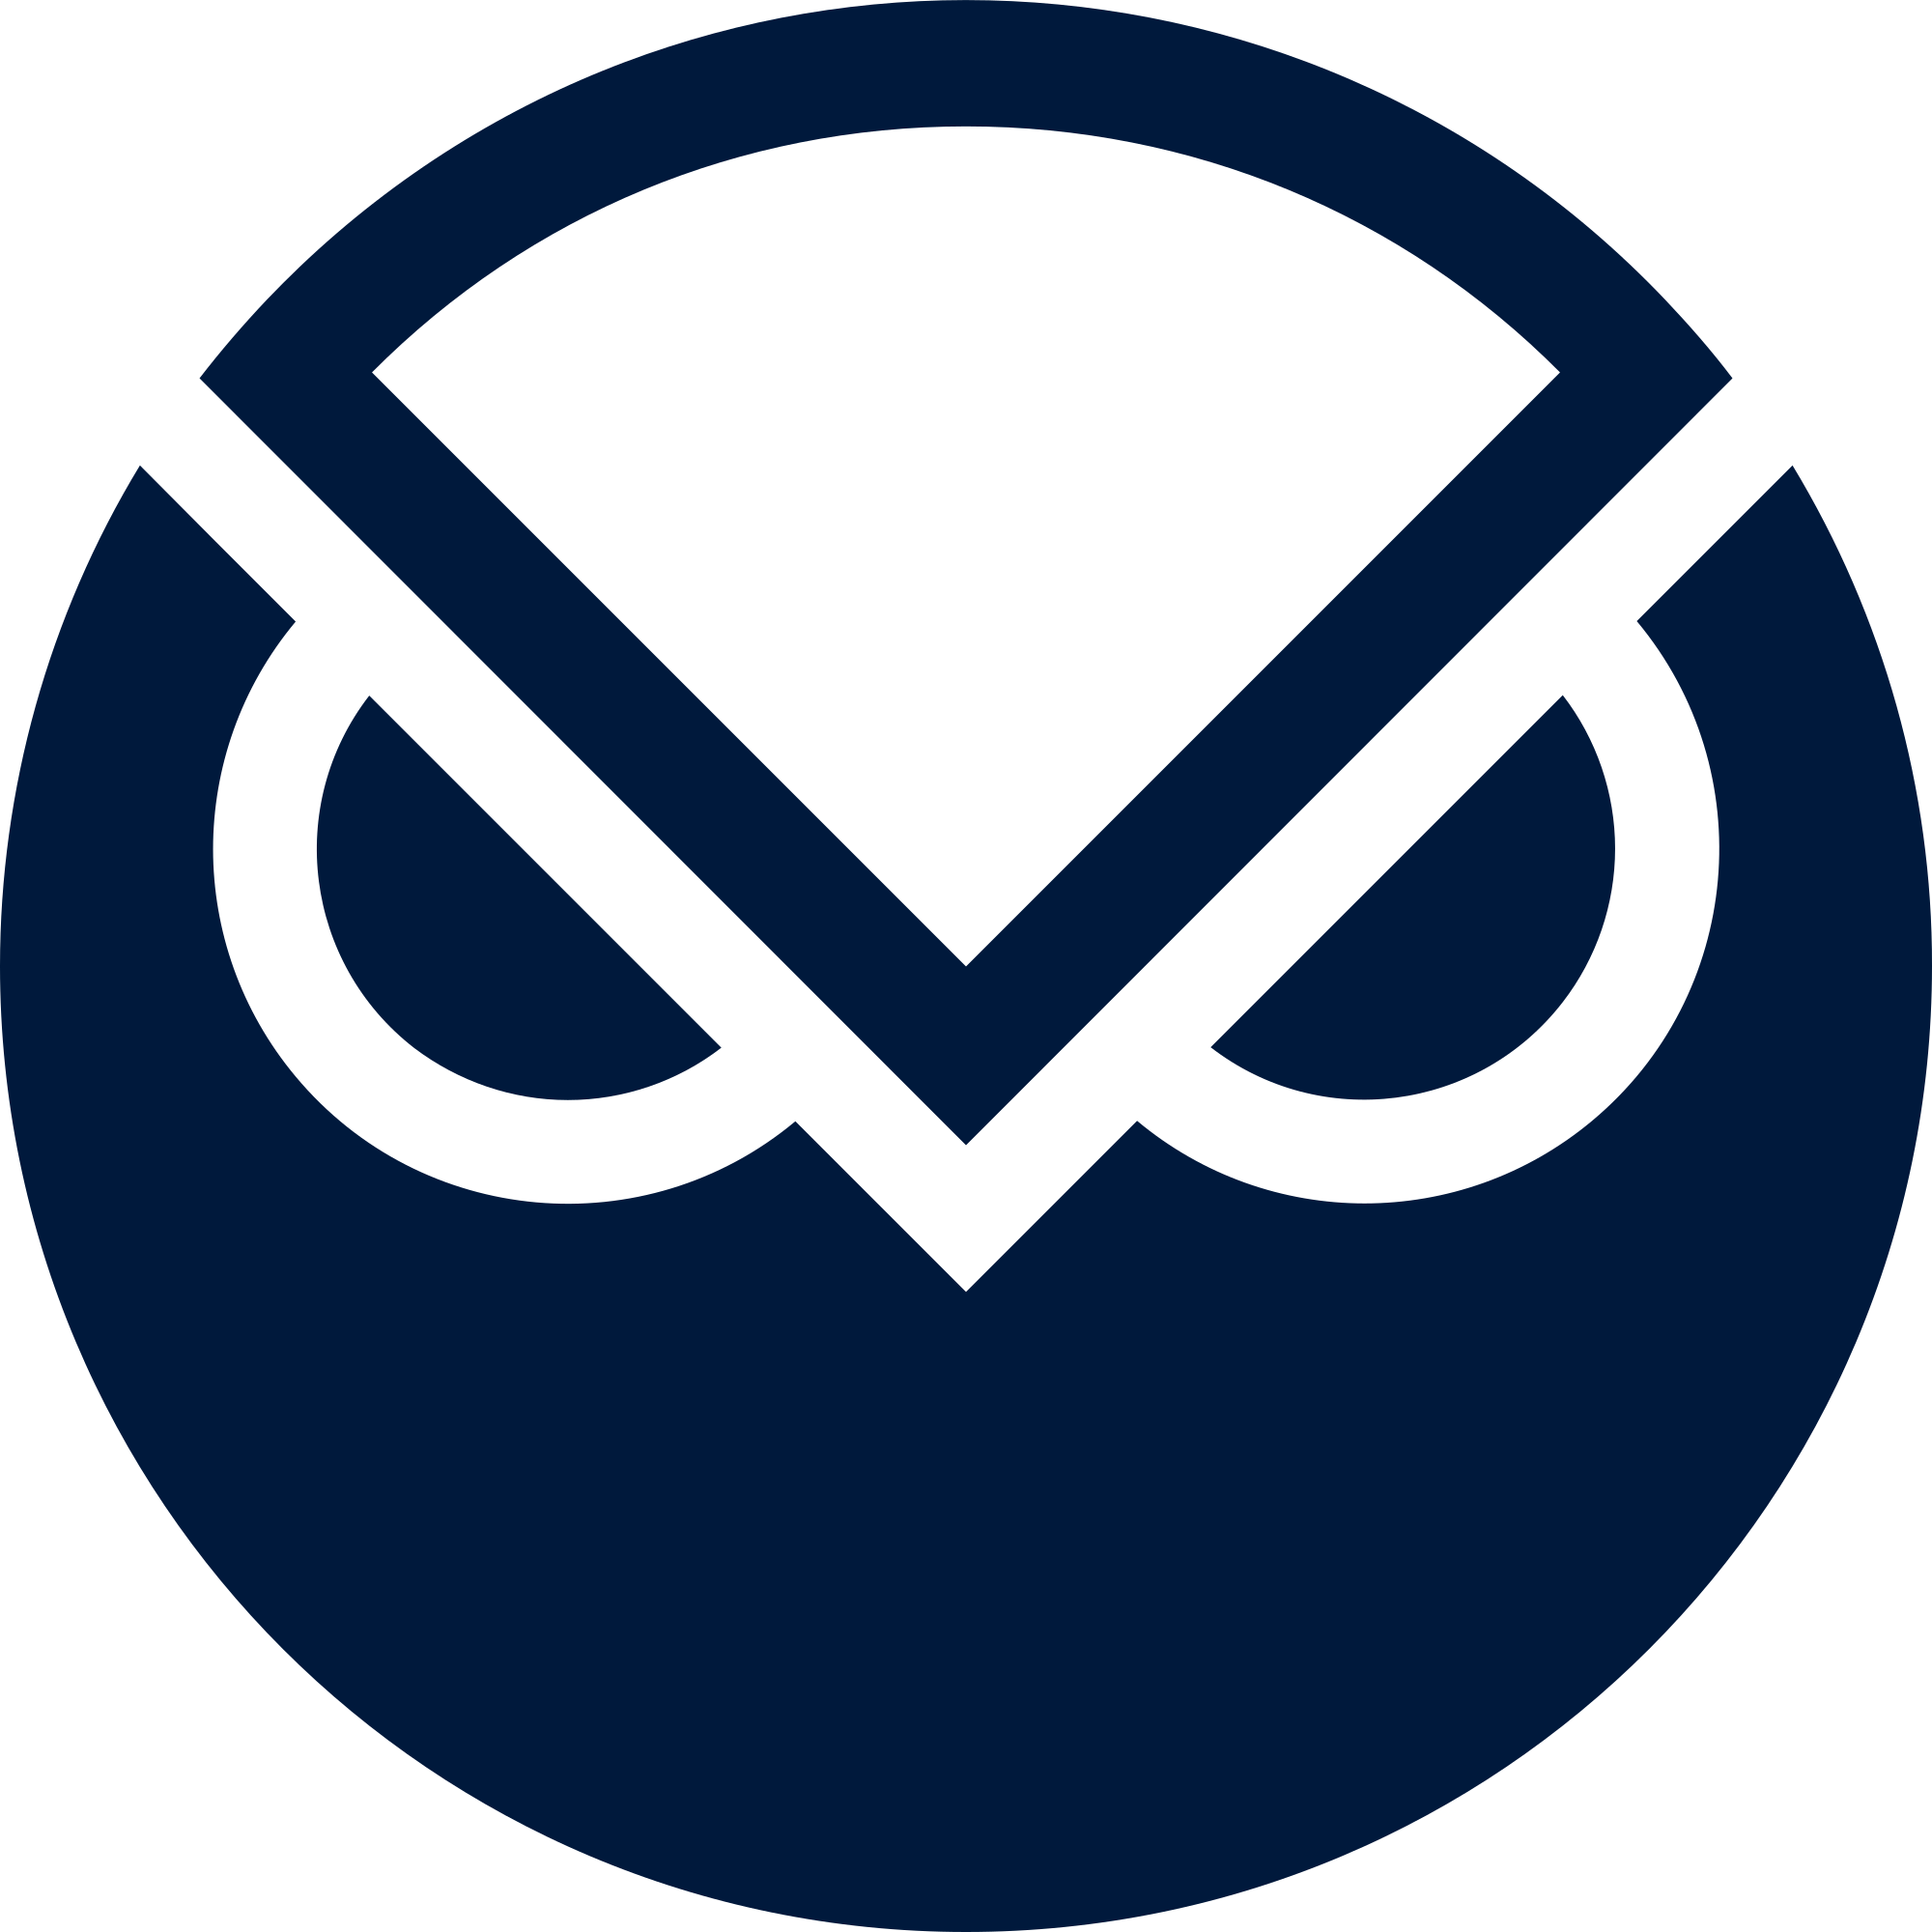 Gnosis Logo